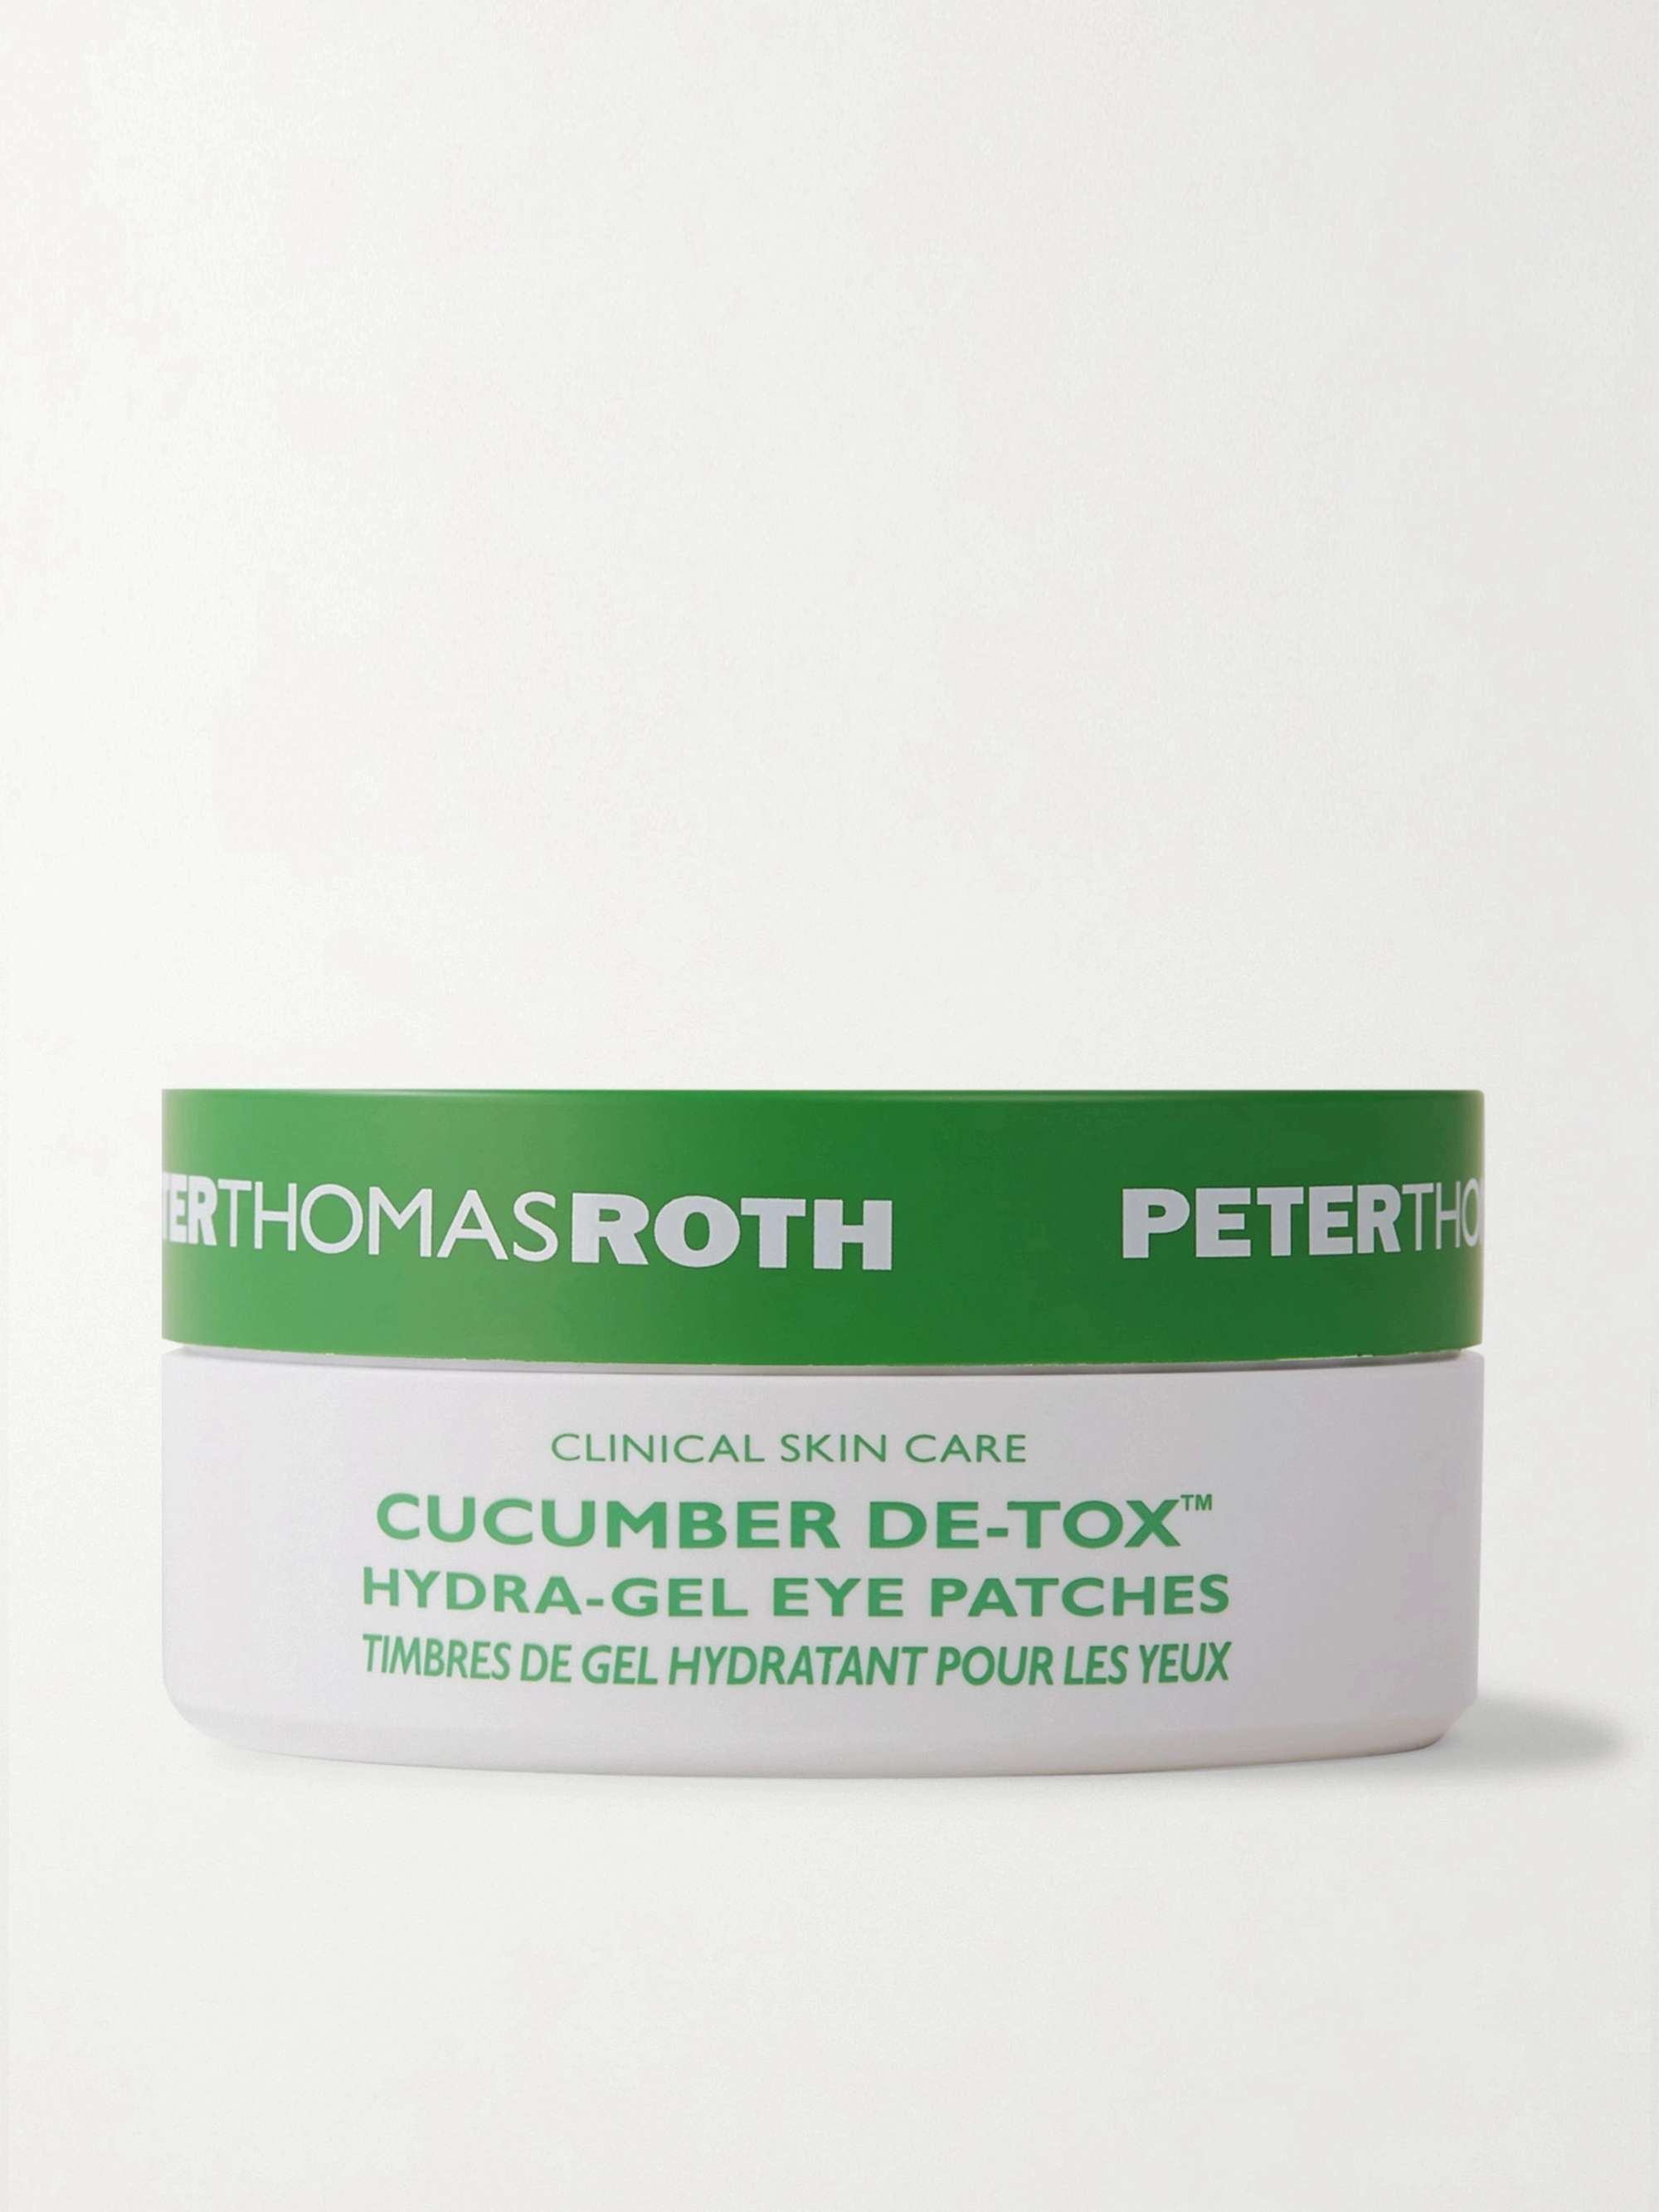 PETER THOMAS ROTH Cucumber De-Tox Hydra-Gel Eye Patches x 30